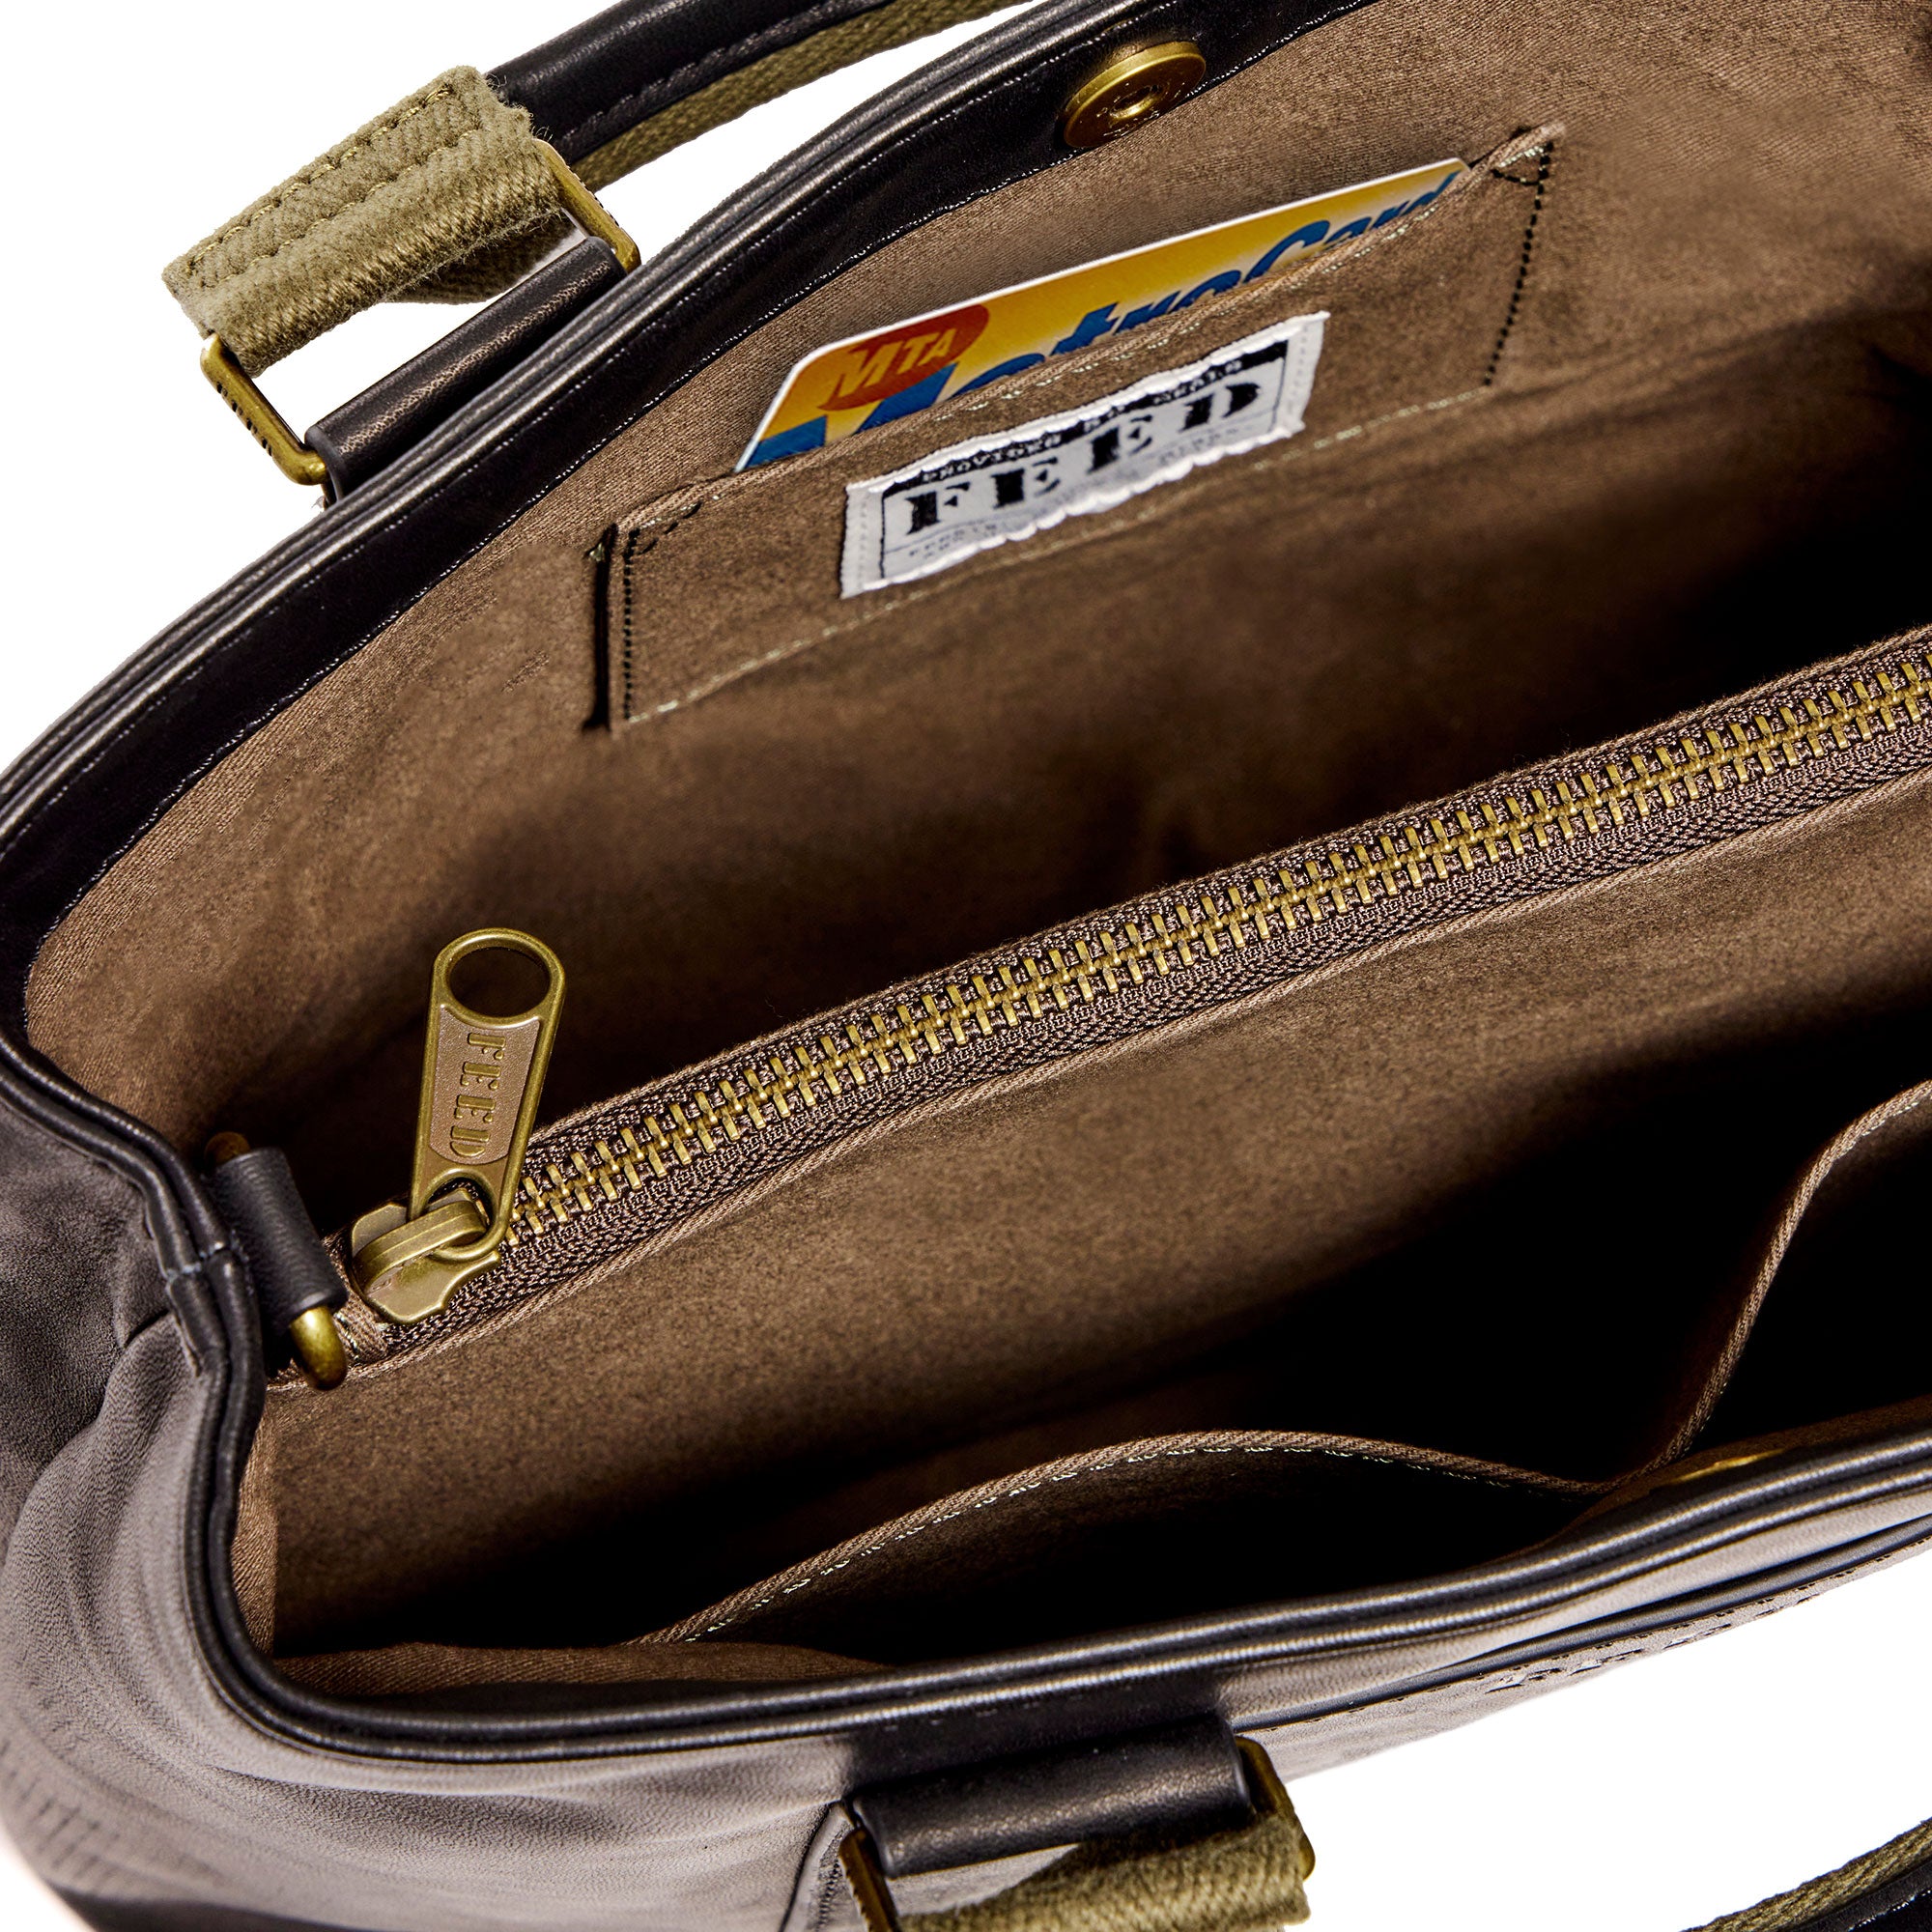 Black | Small leather work bag interior zip pocket